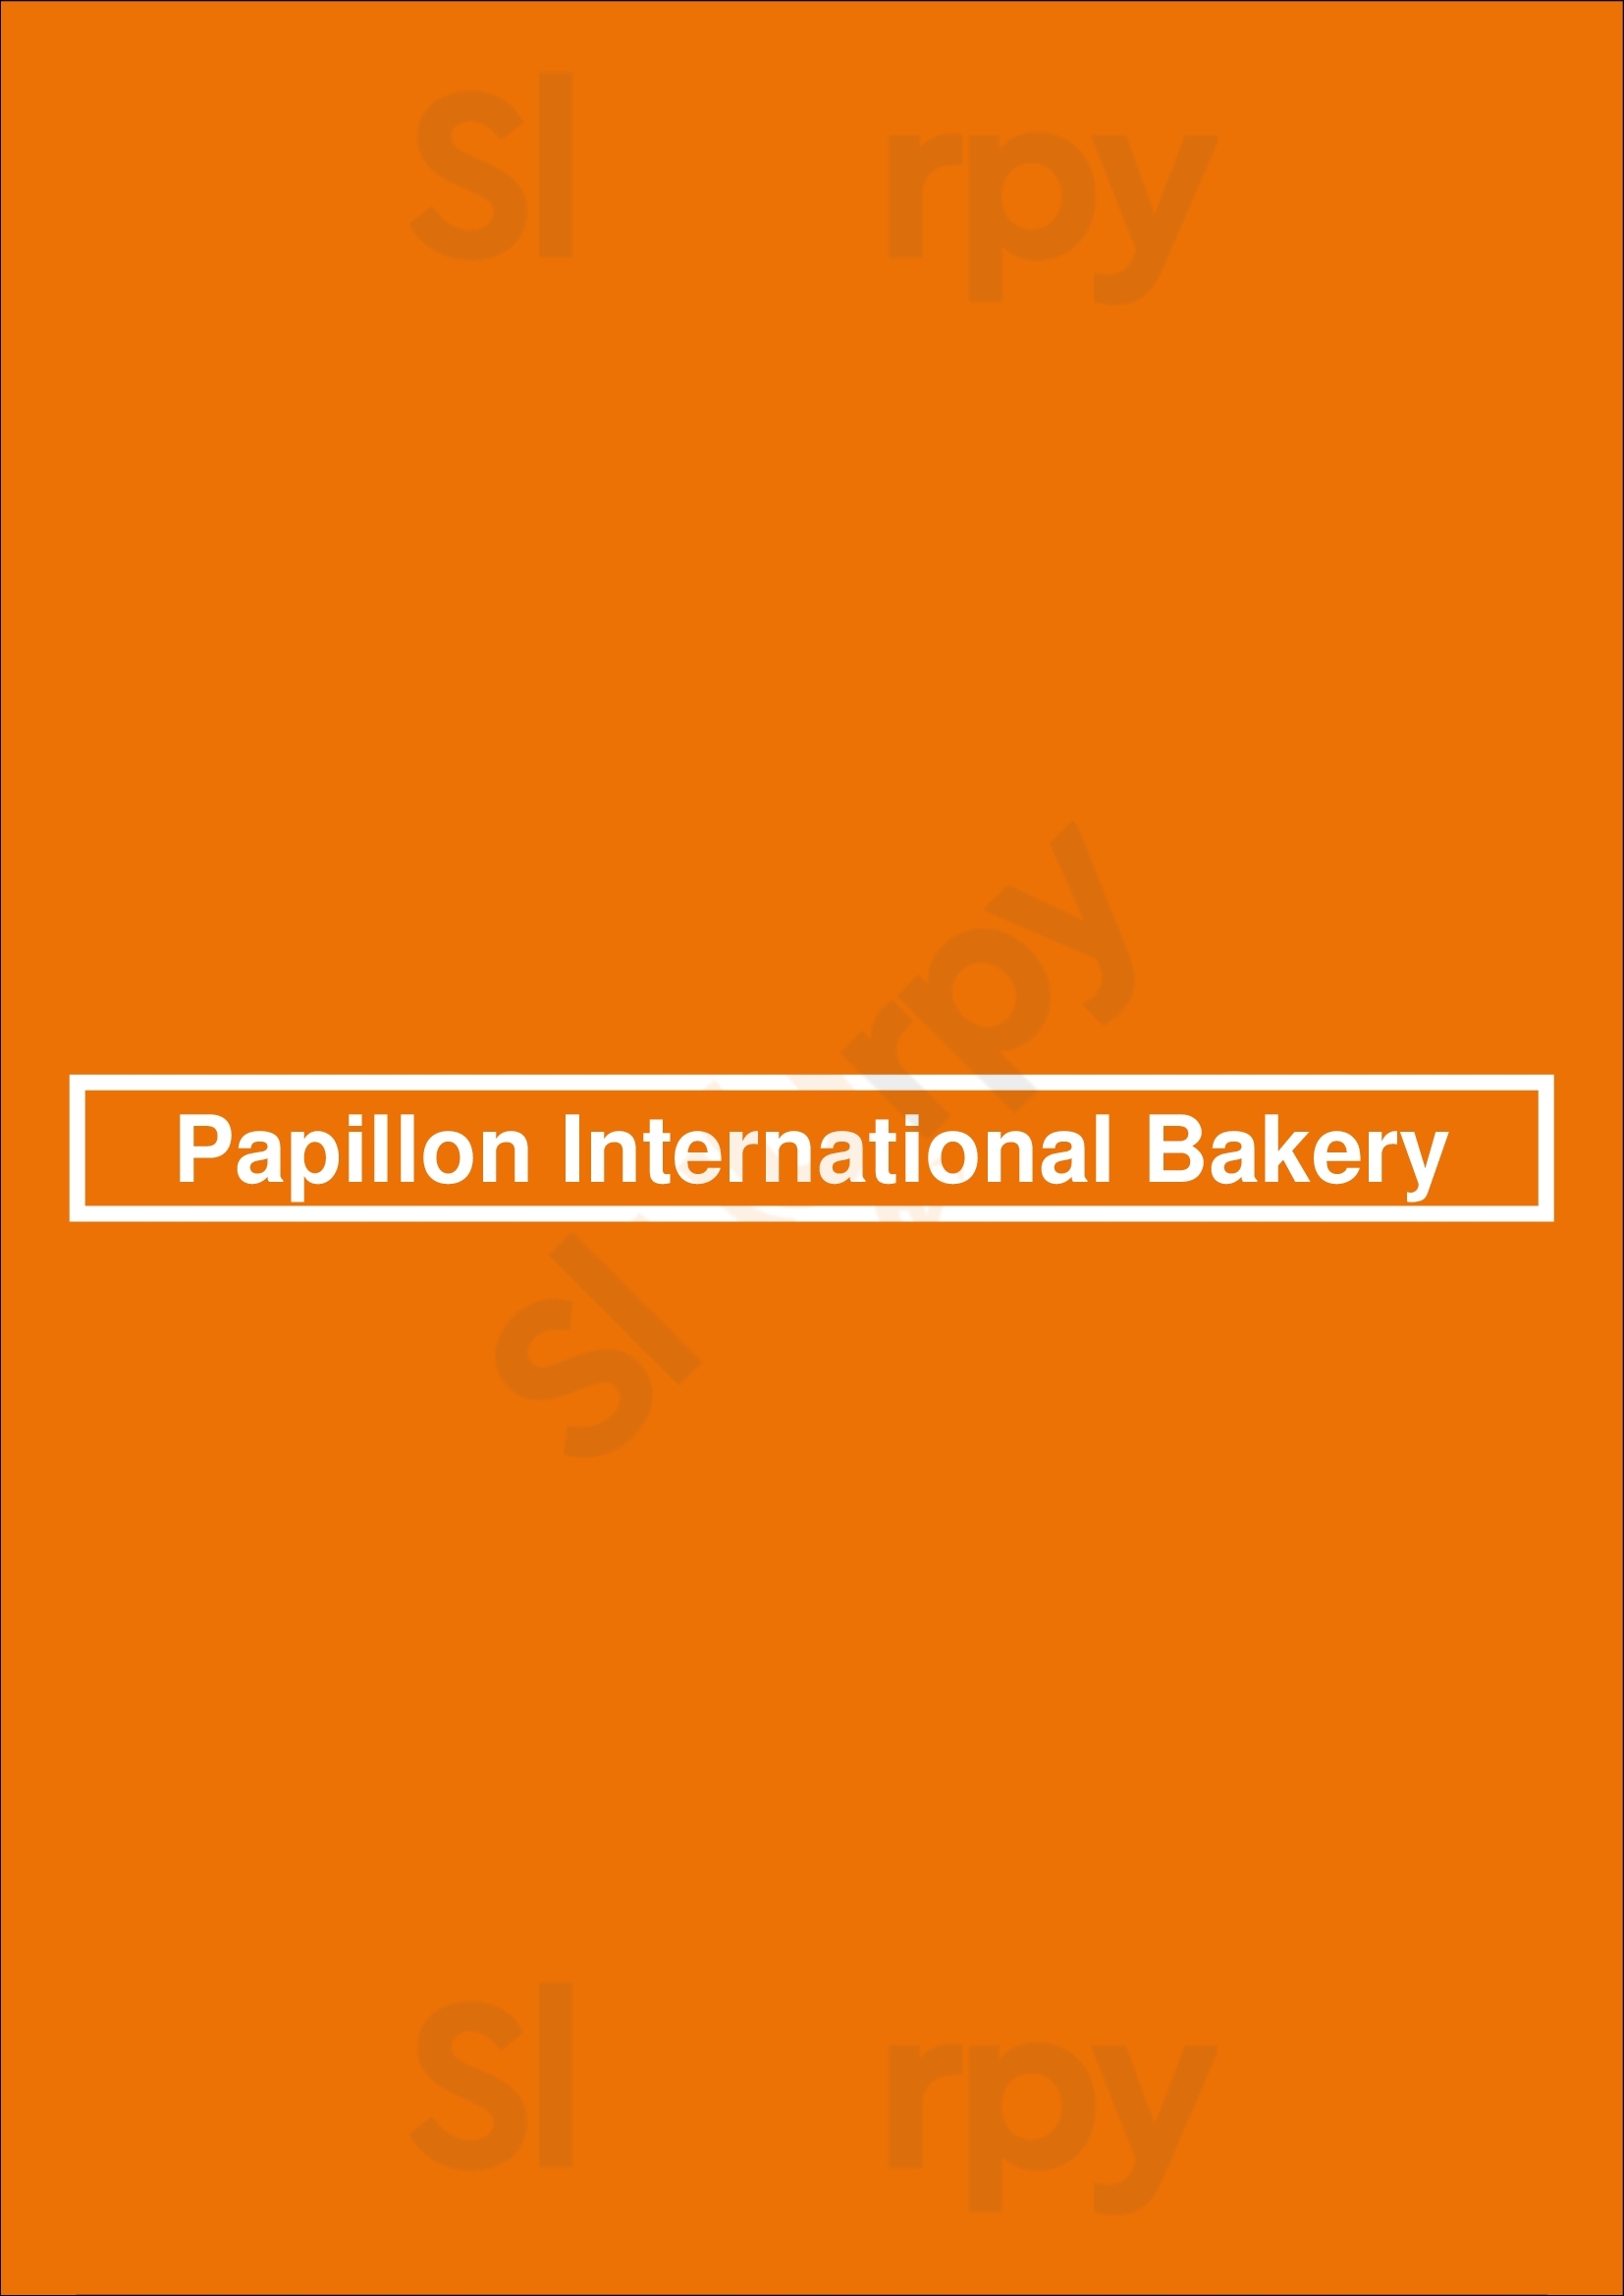 Papillon International Bakery Los Angeles Menu - 1